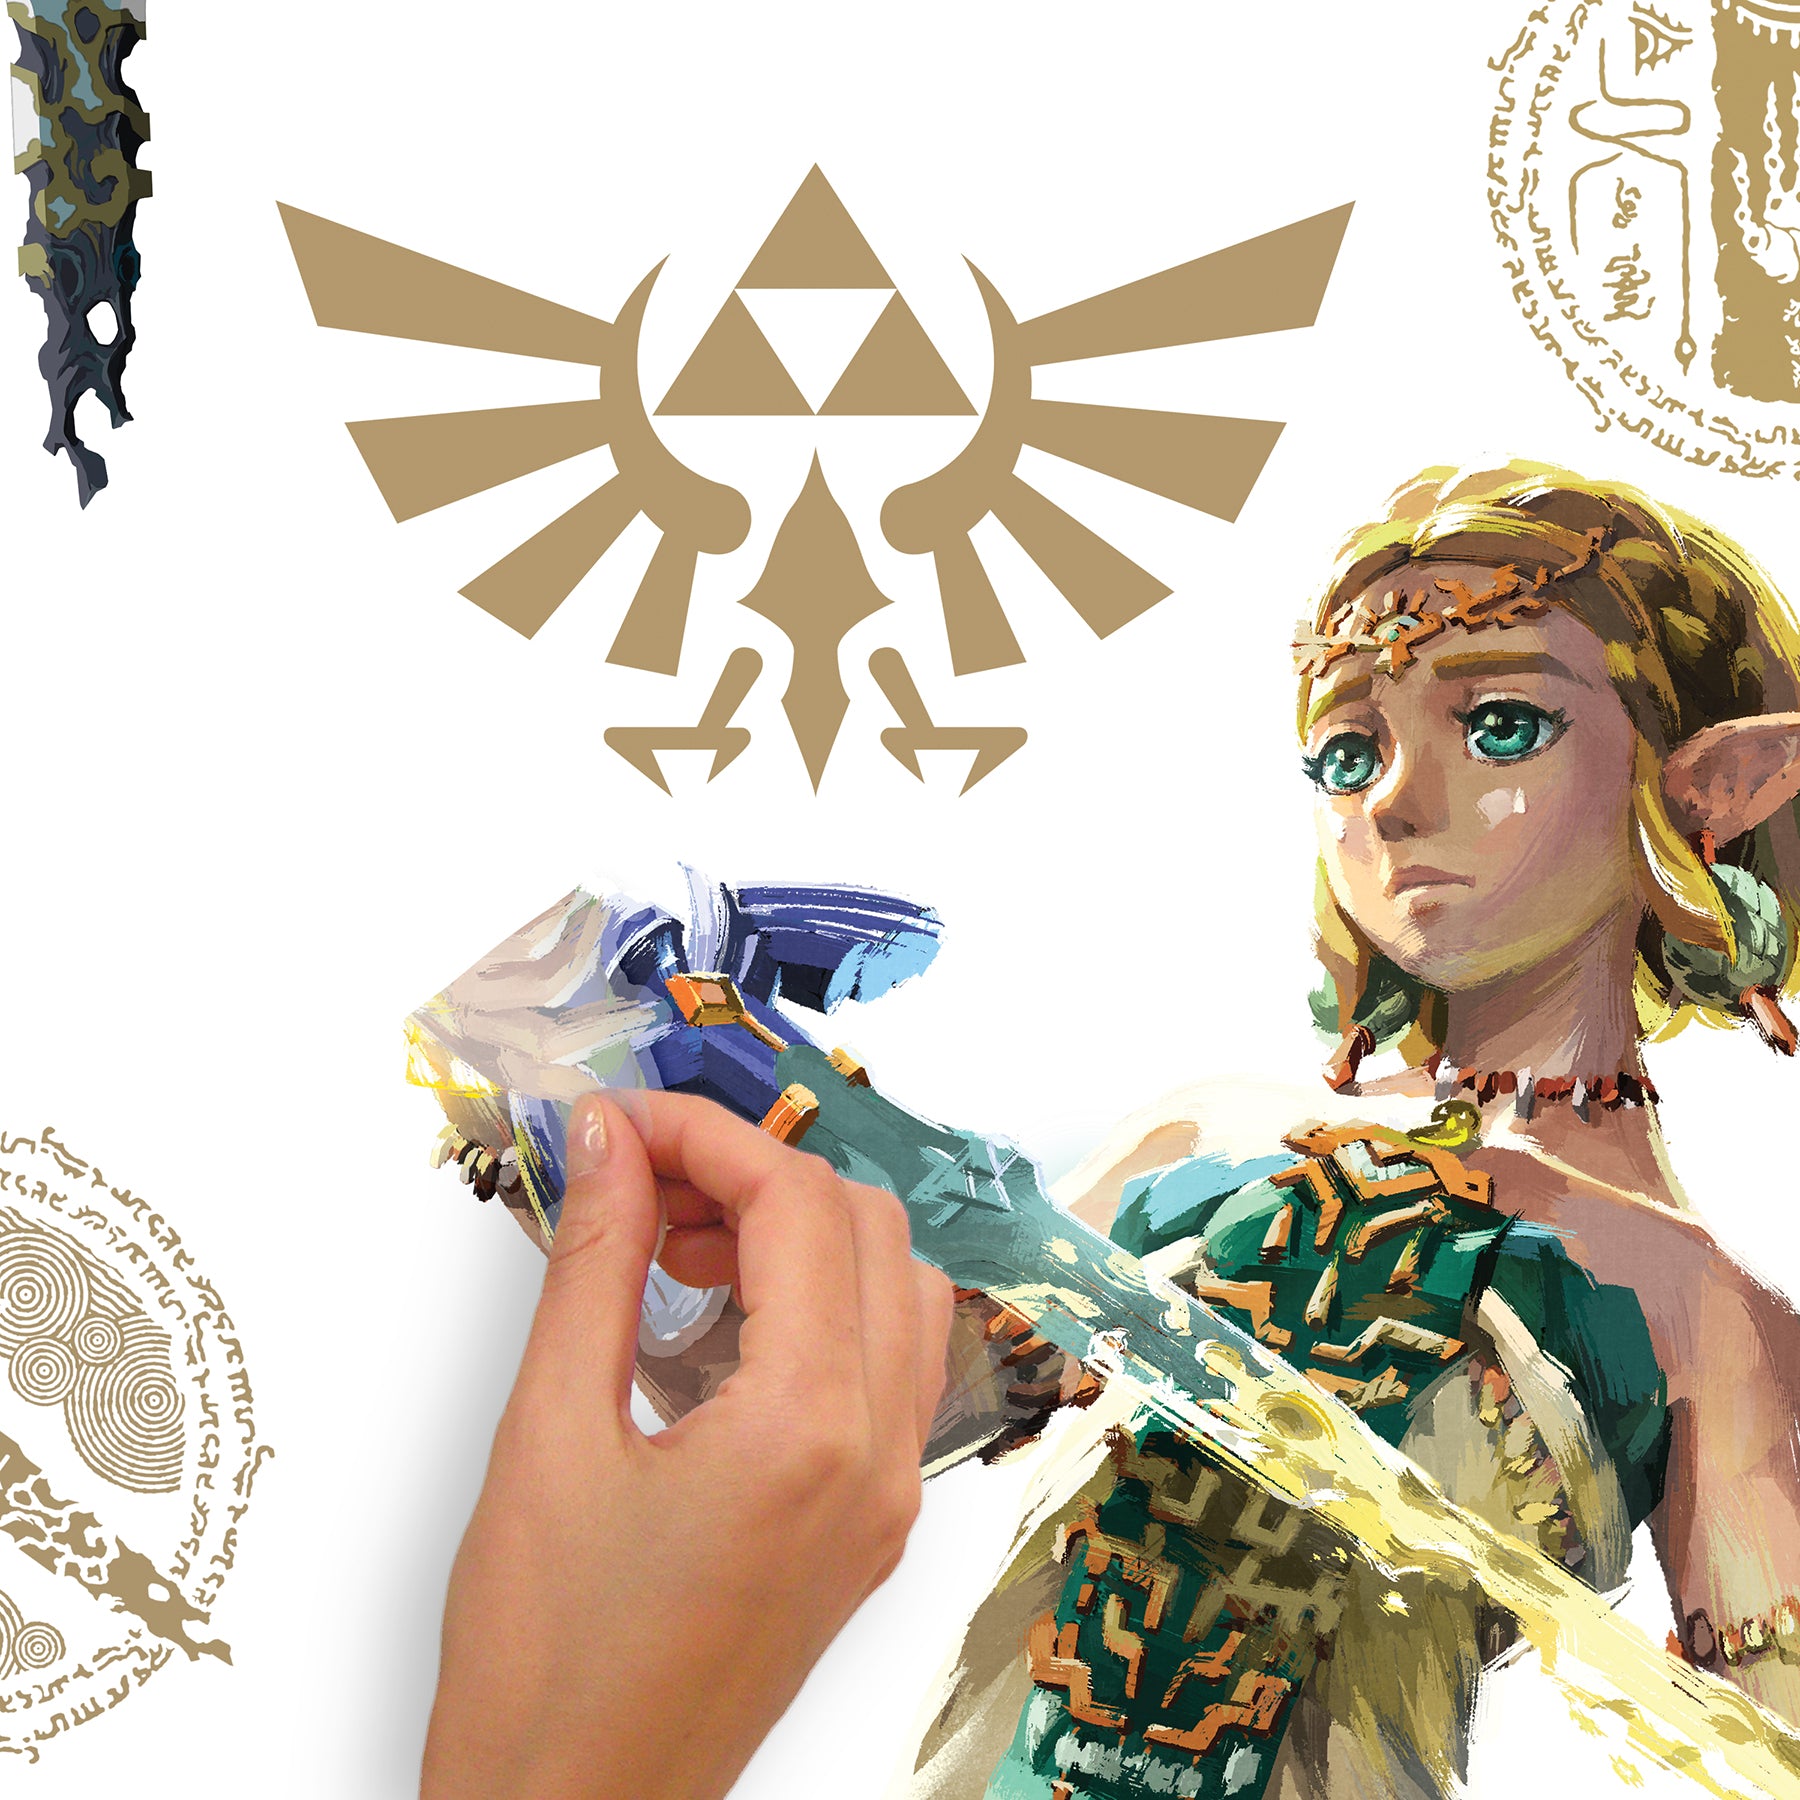 The Legend of Zelda™: Tears of the Kingdom - Zelda & Link Wall Decals Wall Decals RoomMates Decor   